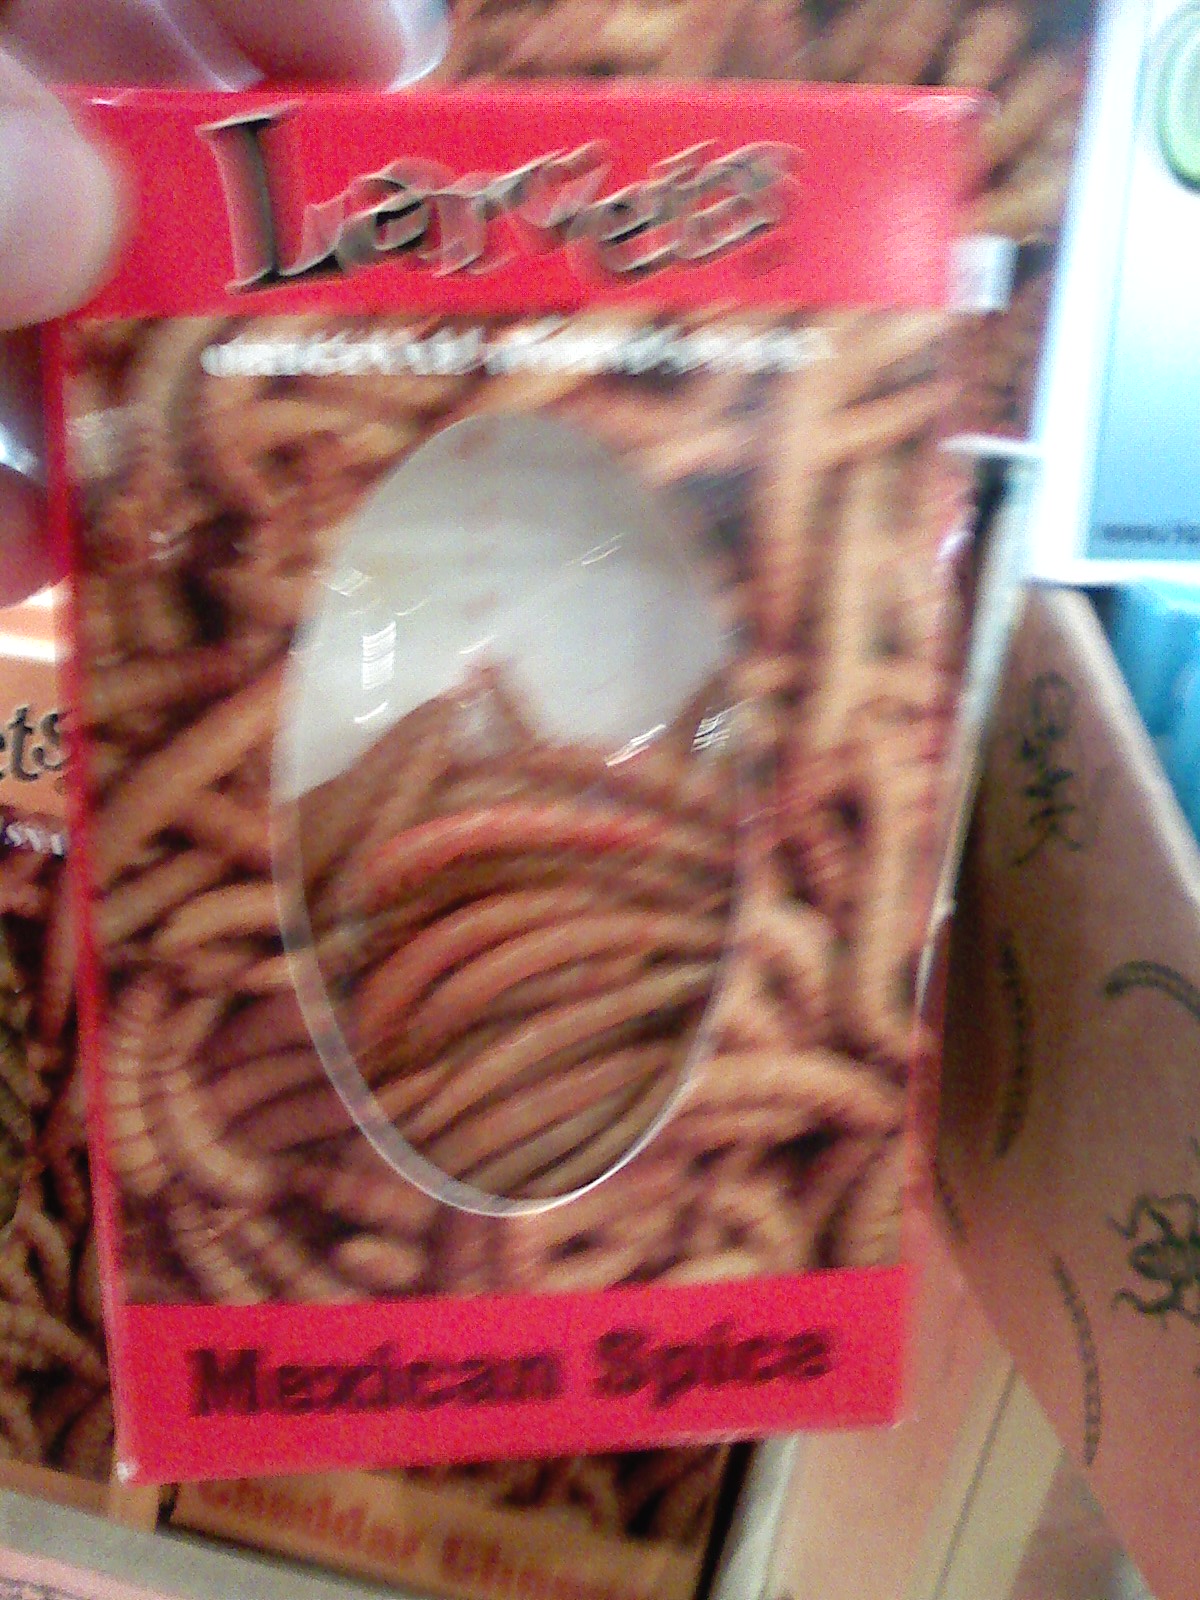 Mexican spice flavor